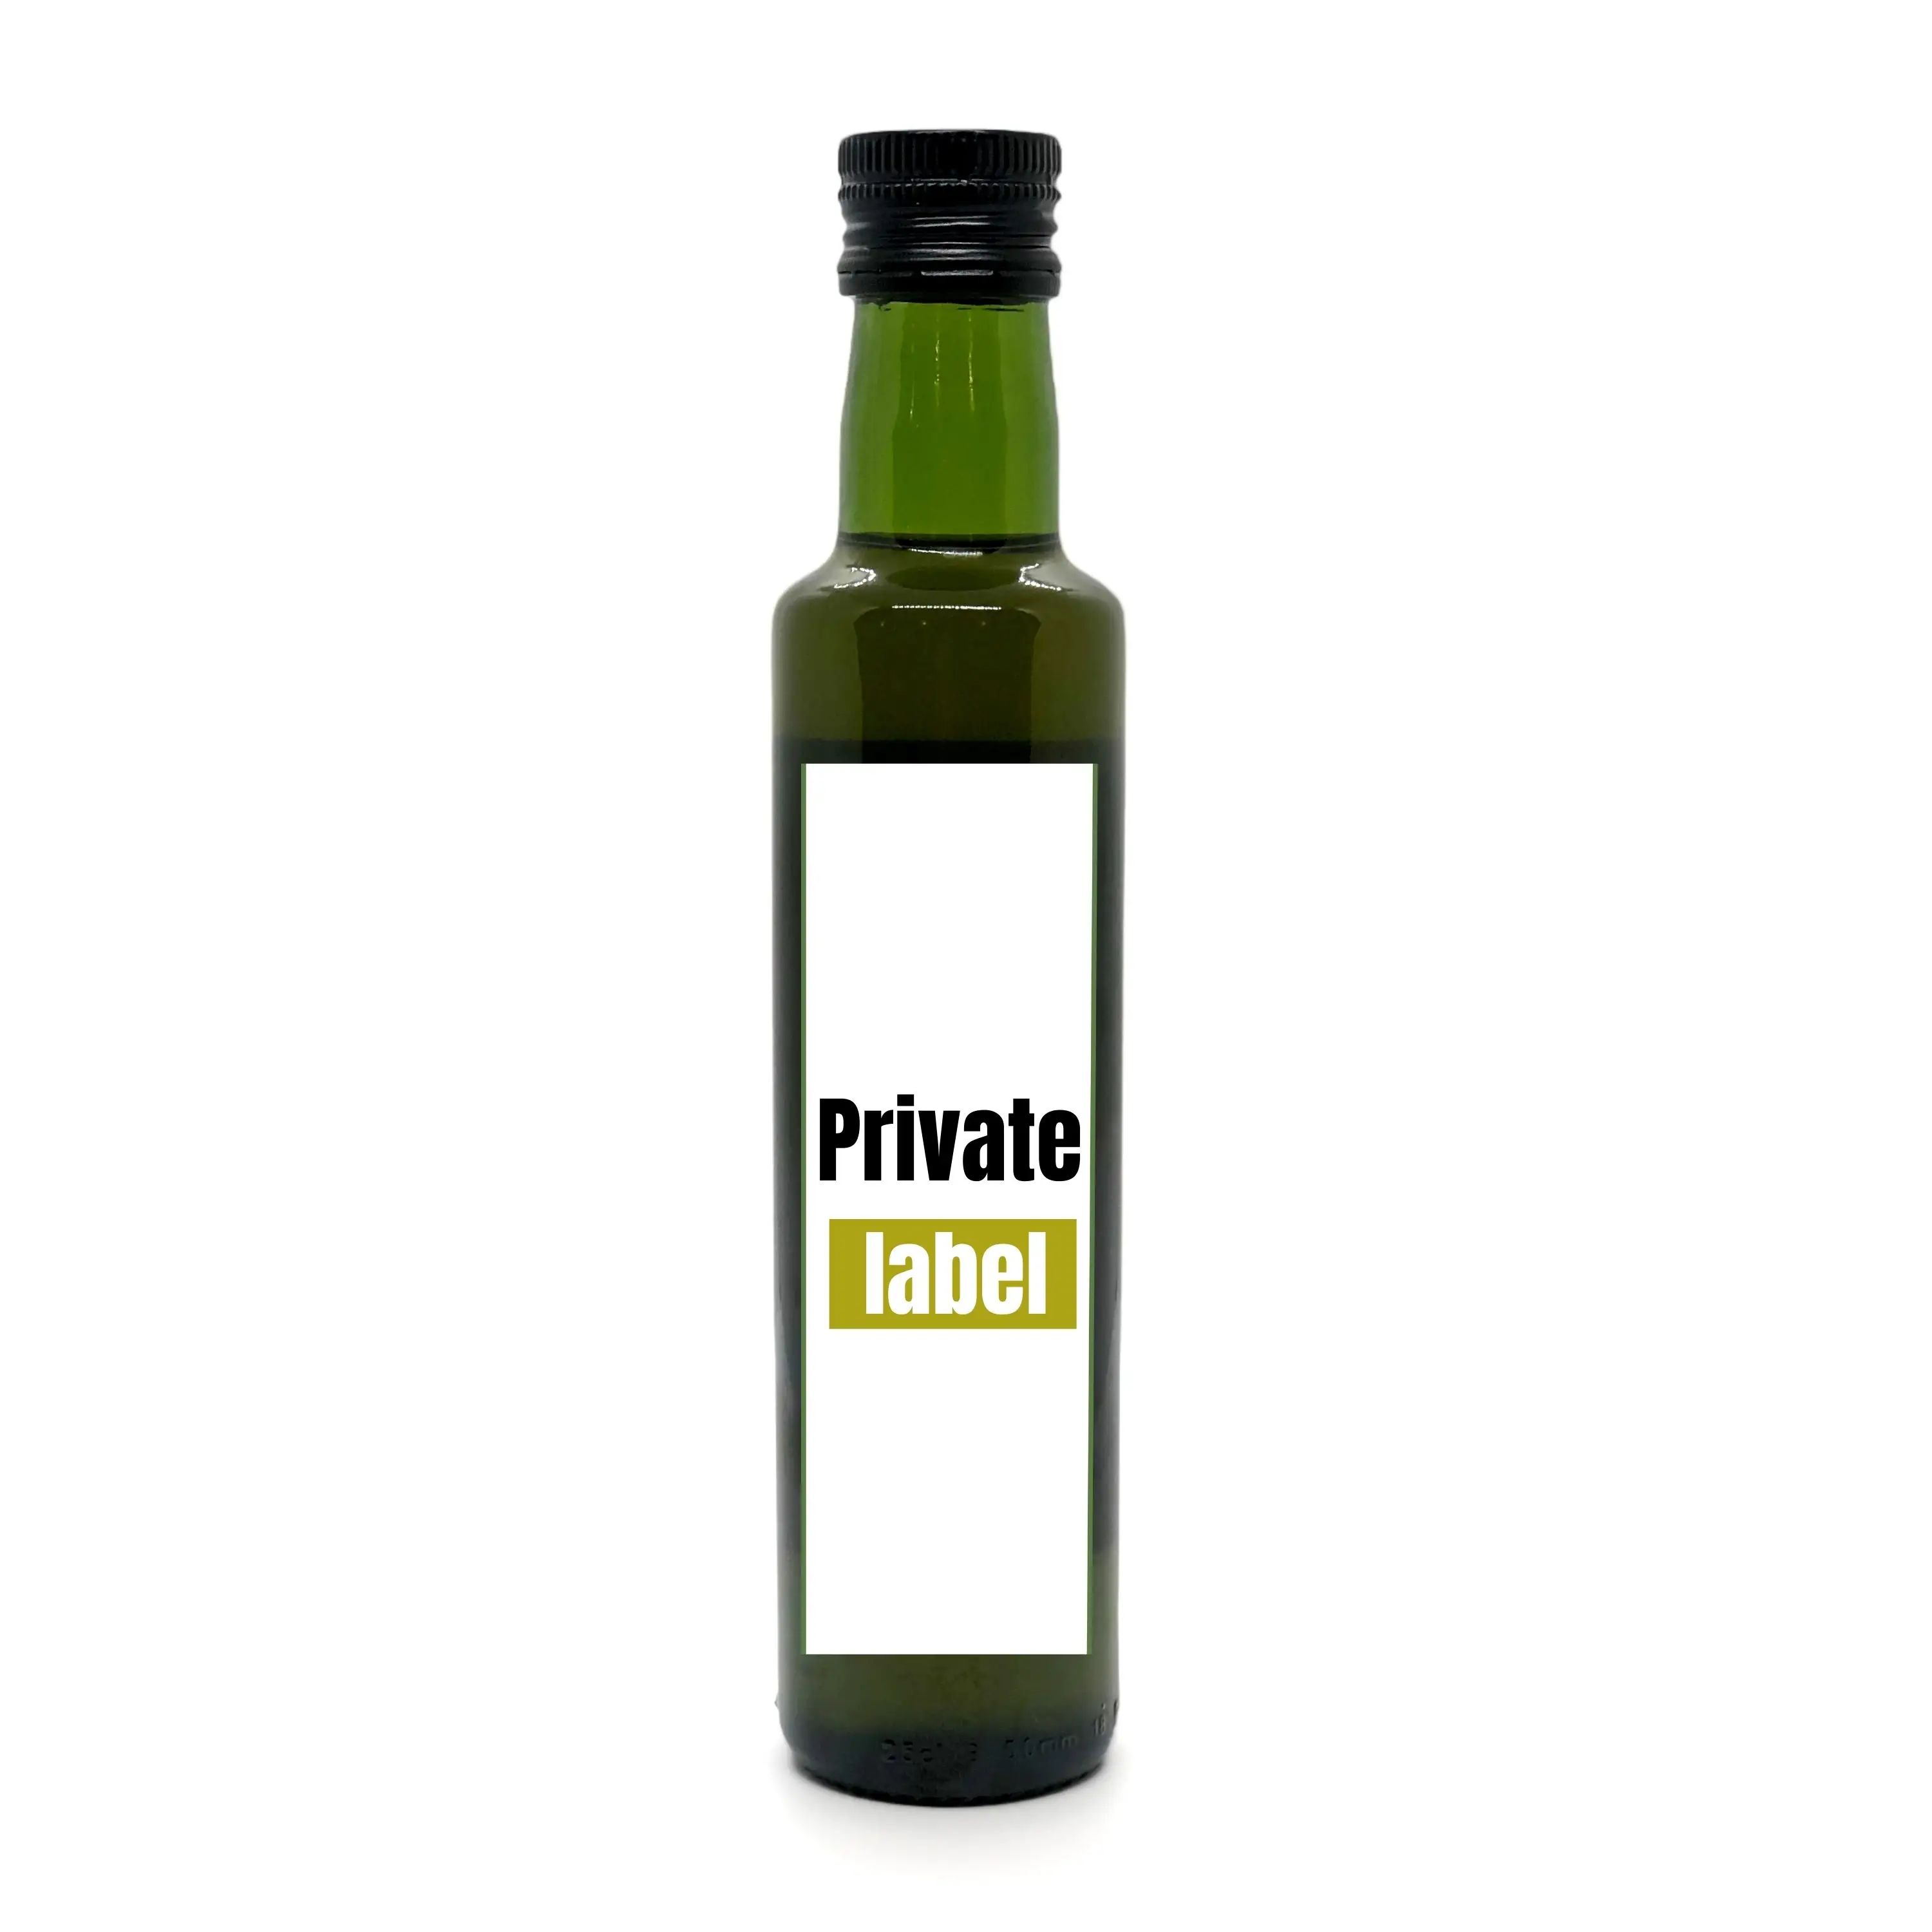 Etiqueta privada extra virgin azeite 250ml vidro dorica garrafa verde, primeira prensa fria feita no azeite espanha